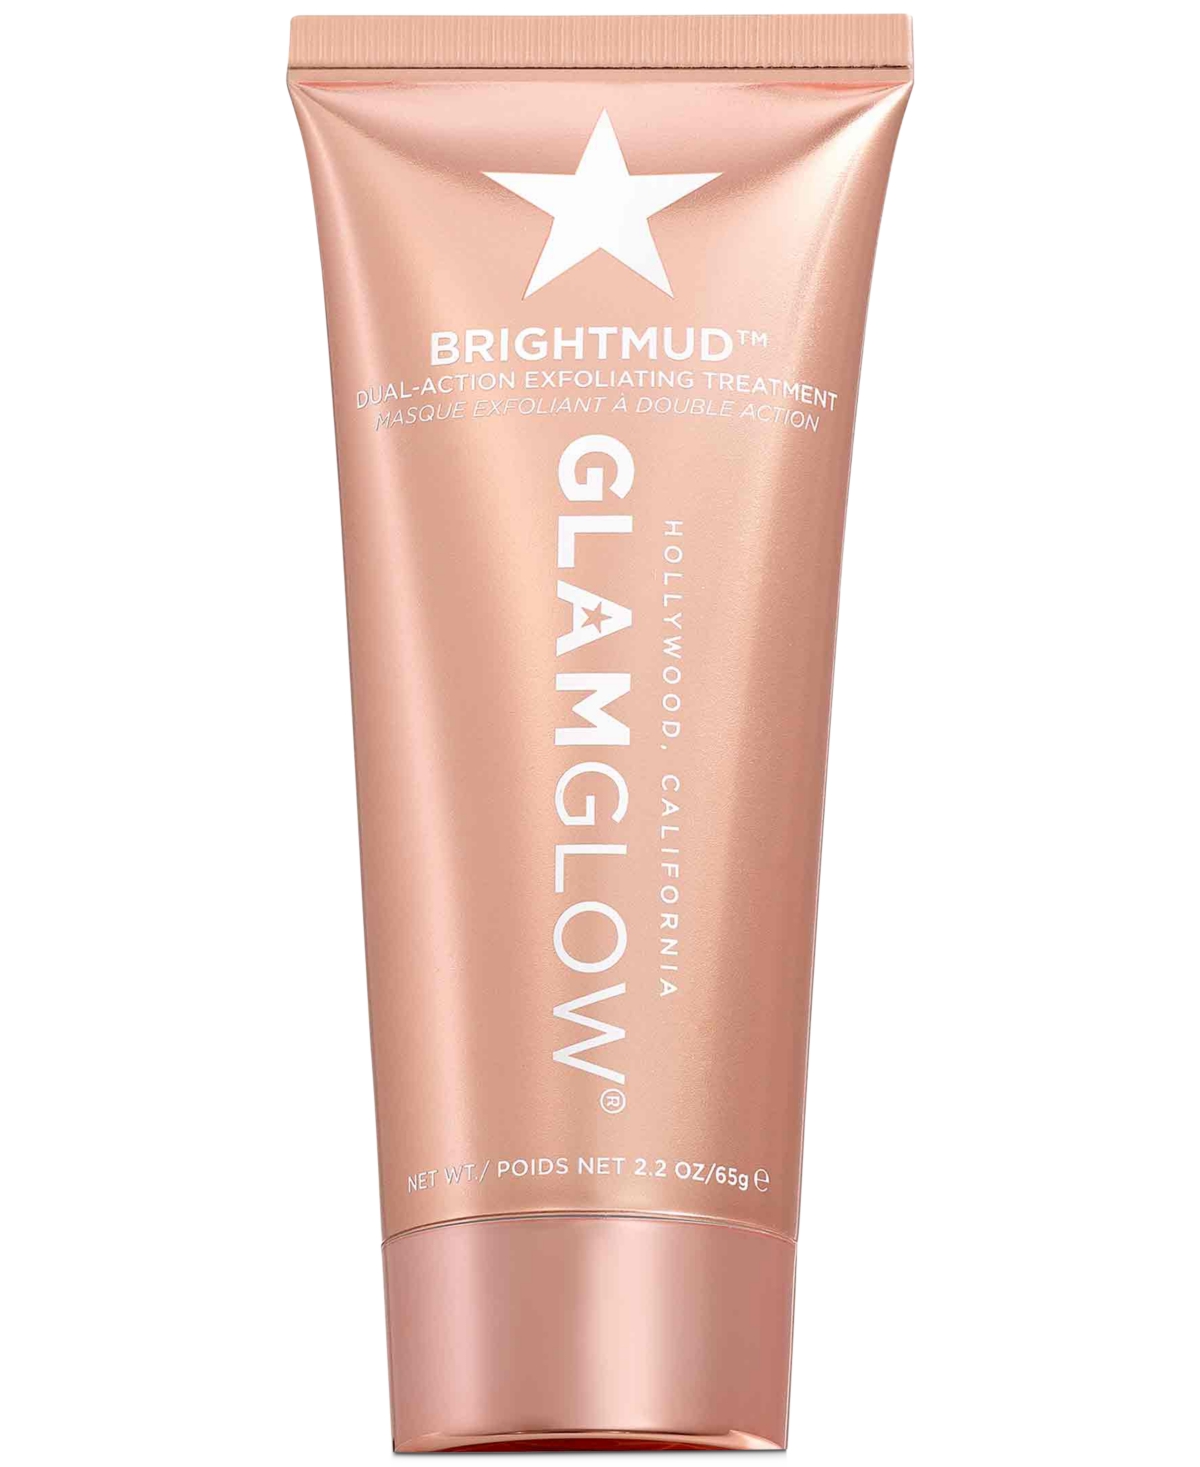 Glamglow Brightmud Dual-Action Exfoliating Treatment, 2.2-oz.